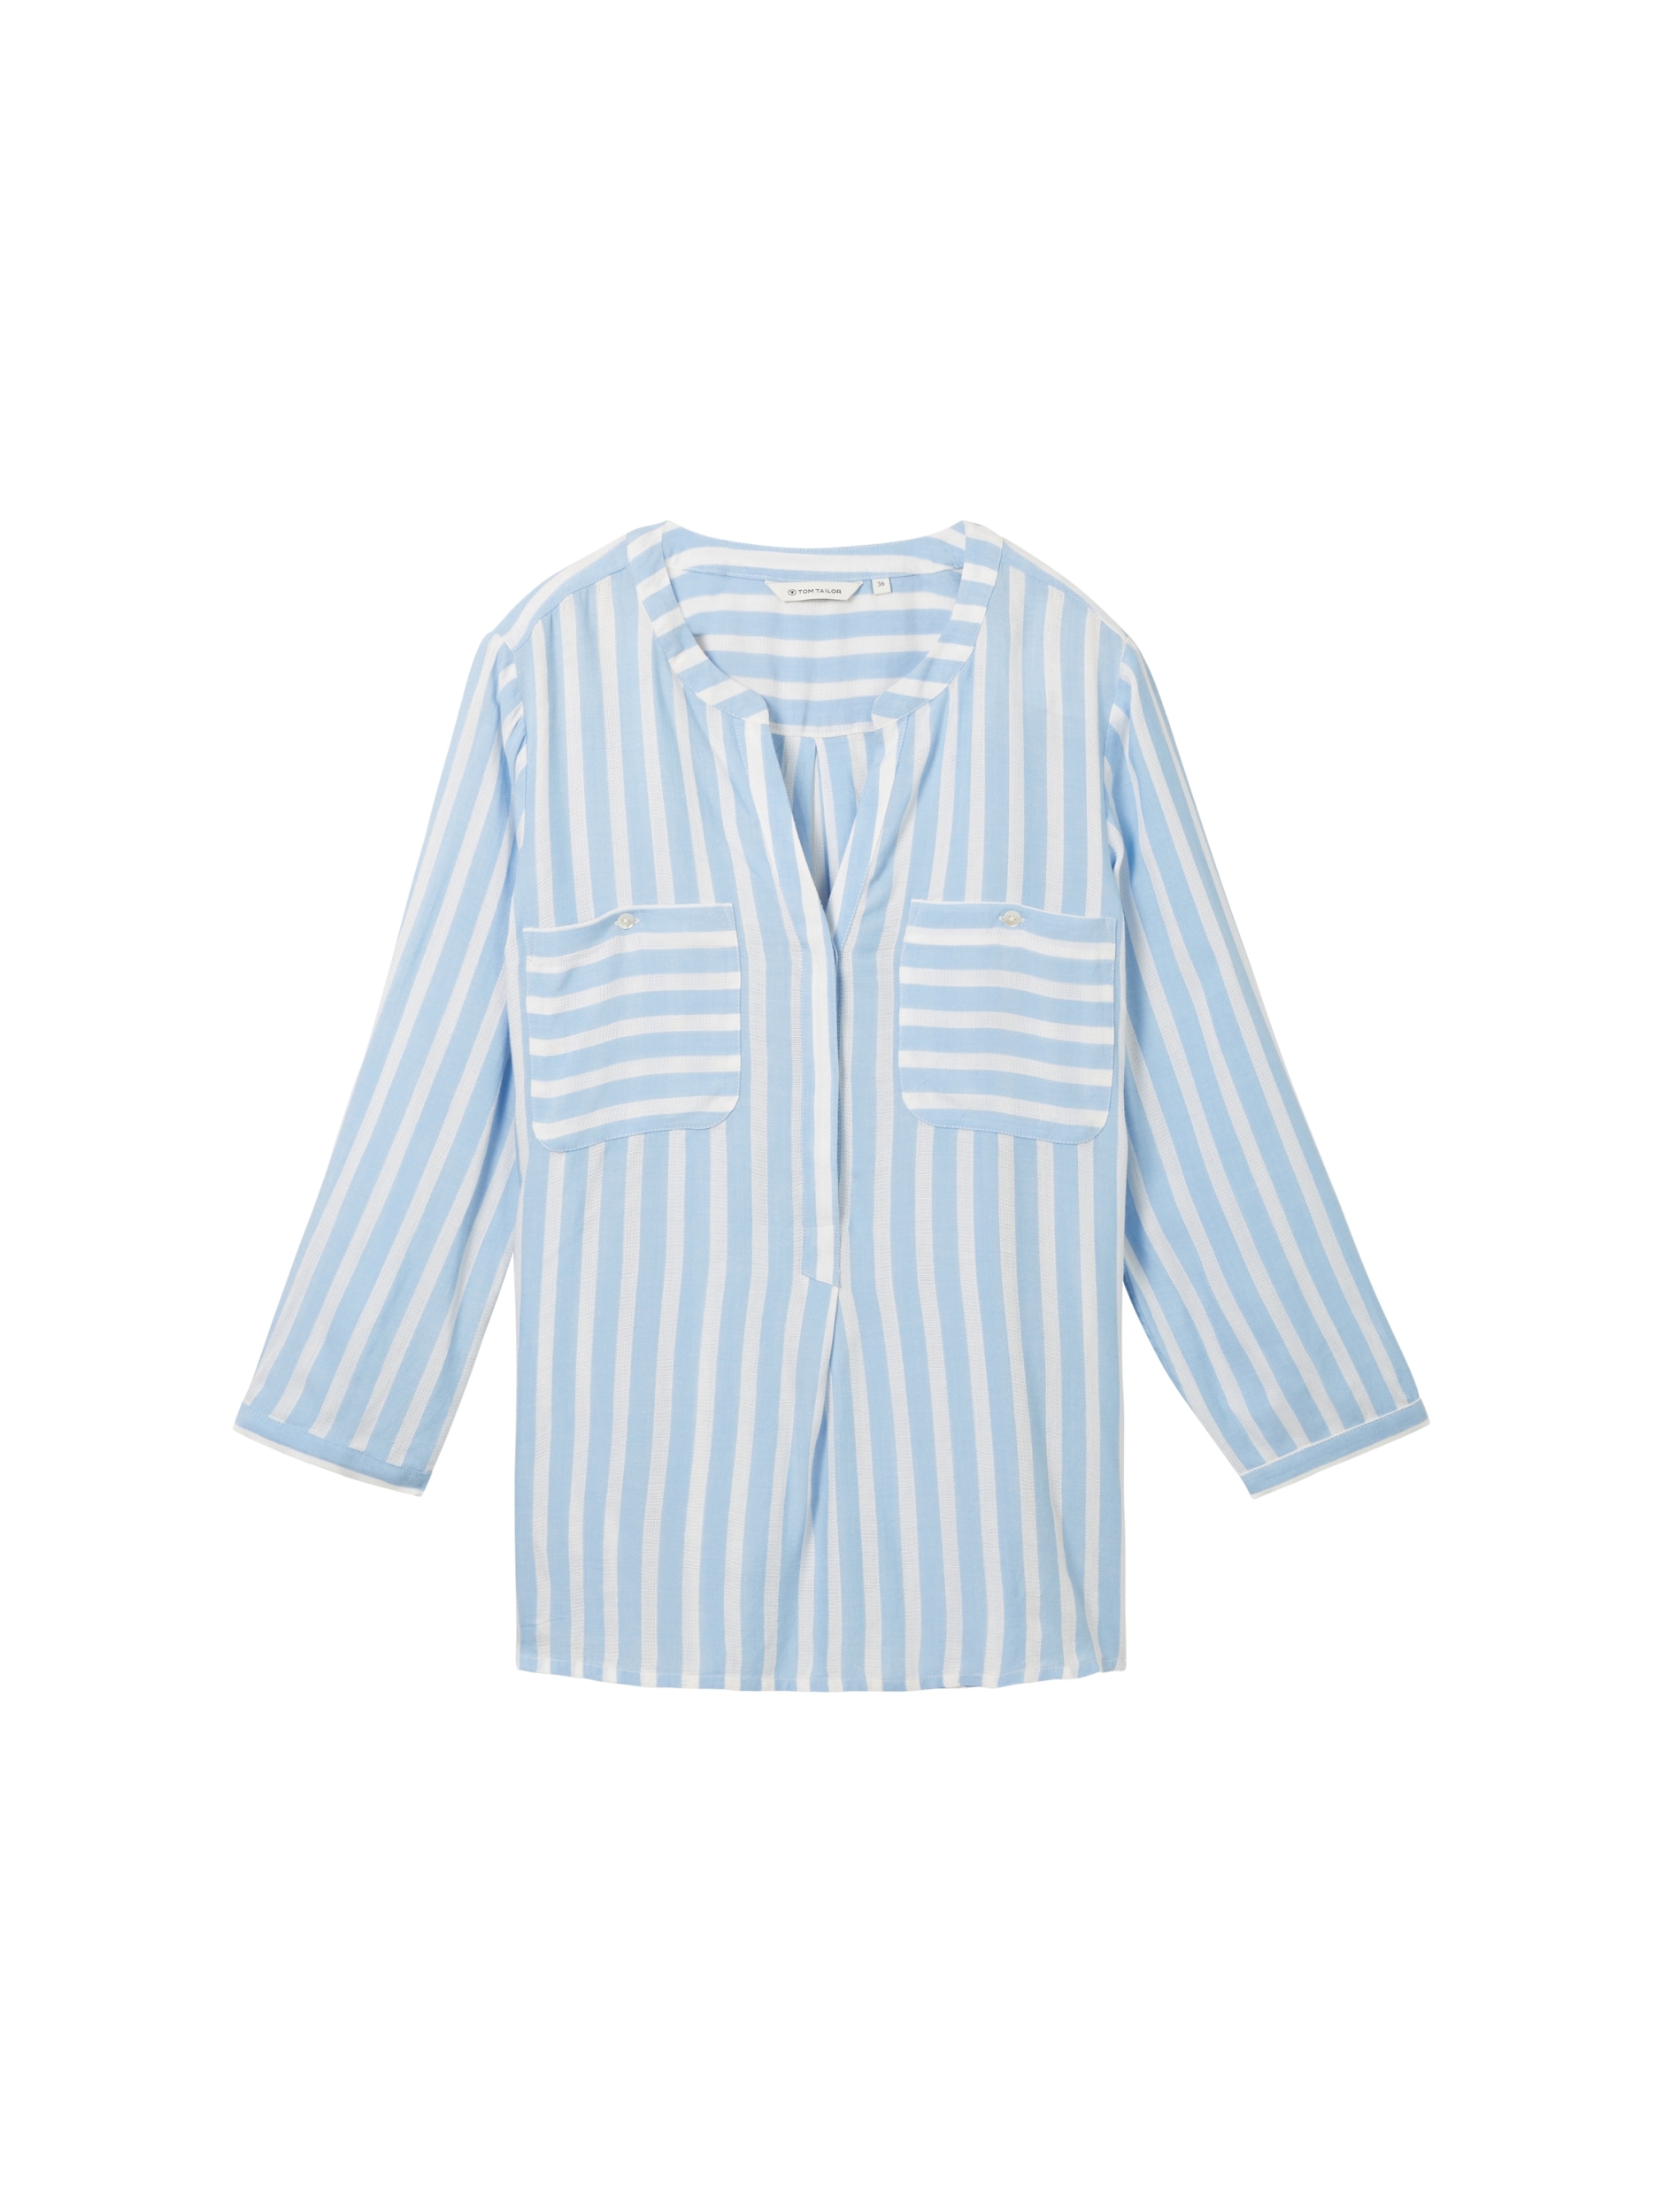 TOM TAILOR blouse striped kaufen online